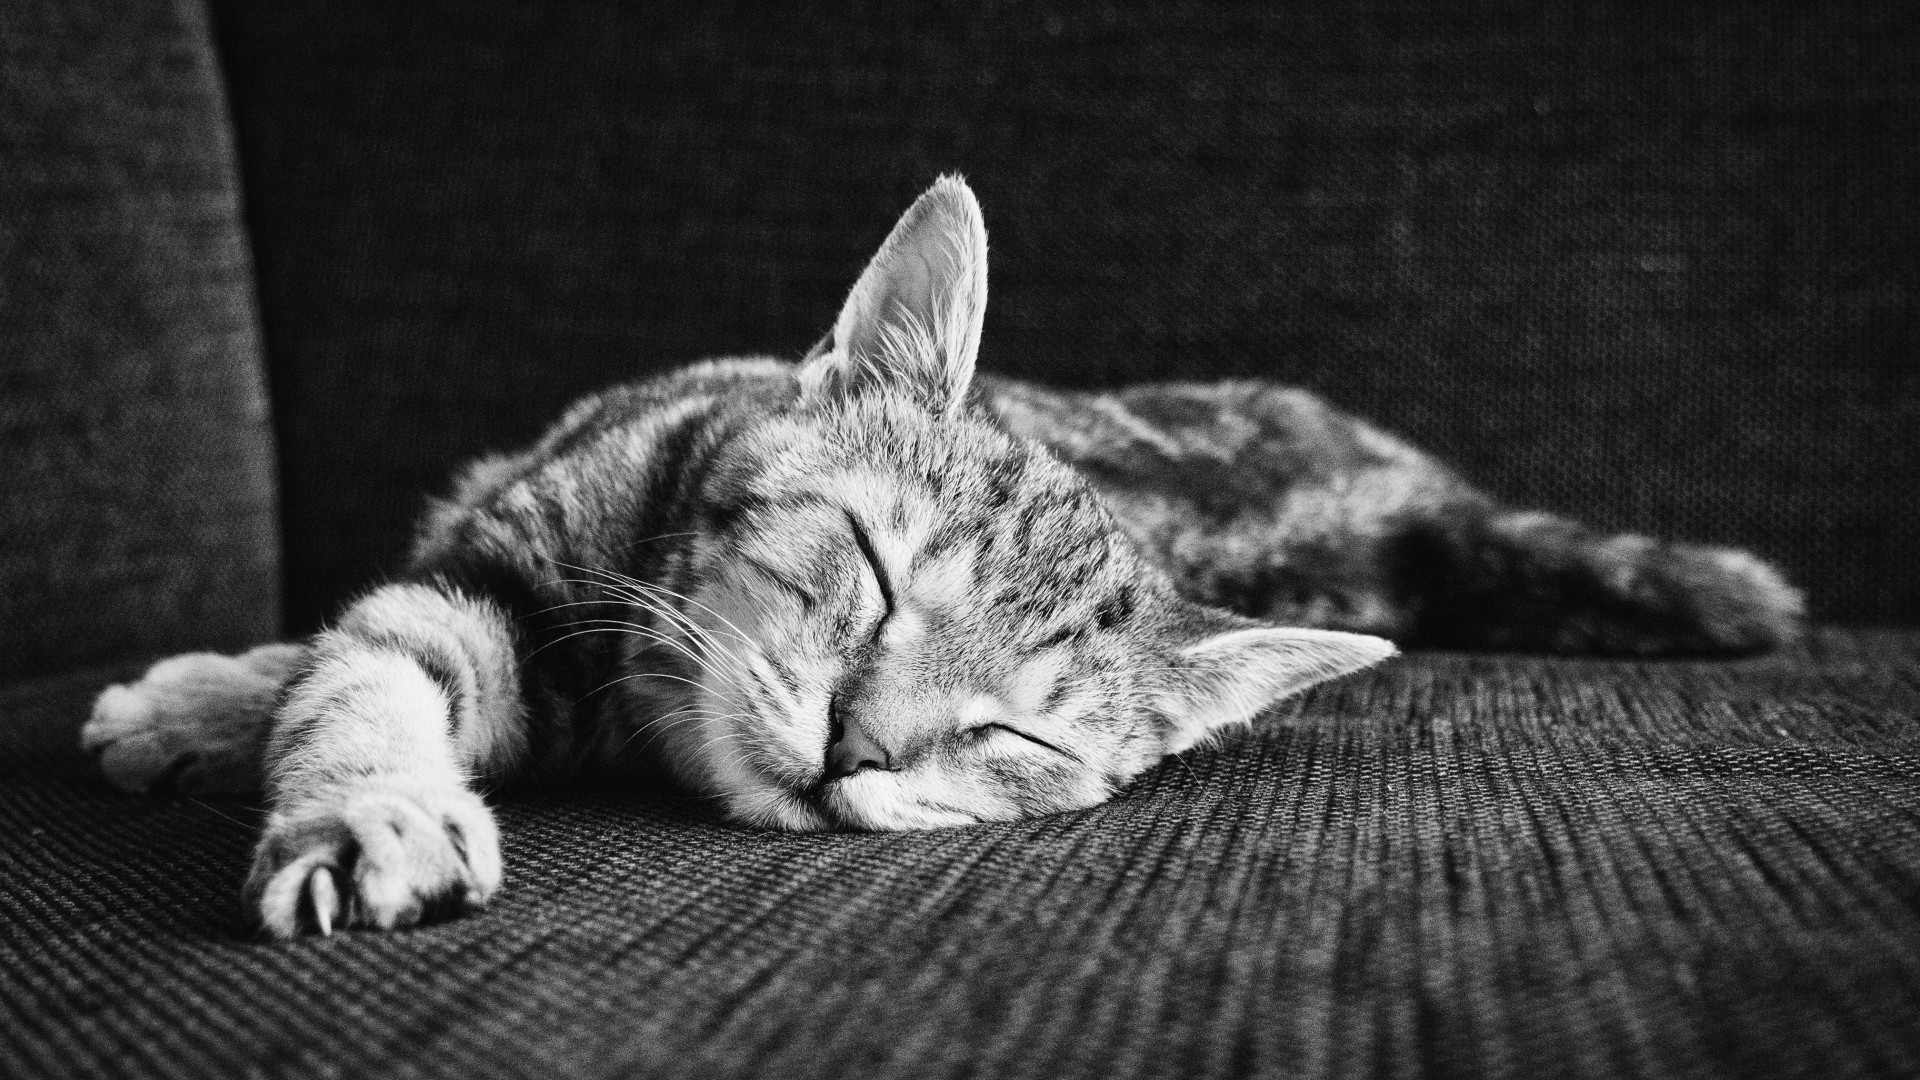 Zen of sleeping kitten wallpaper 1920x1080